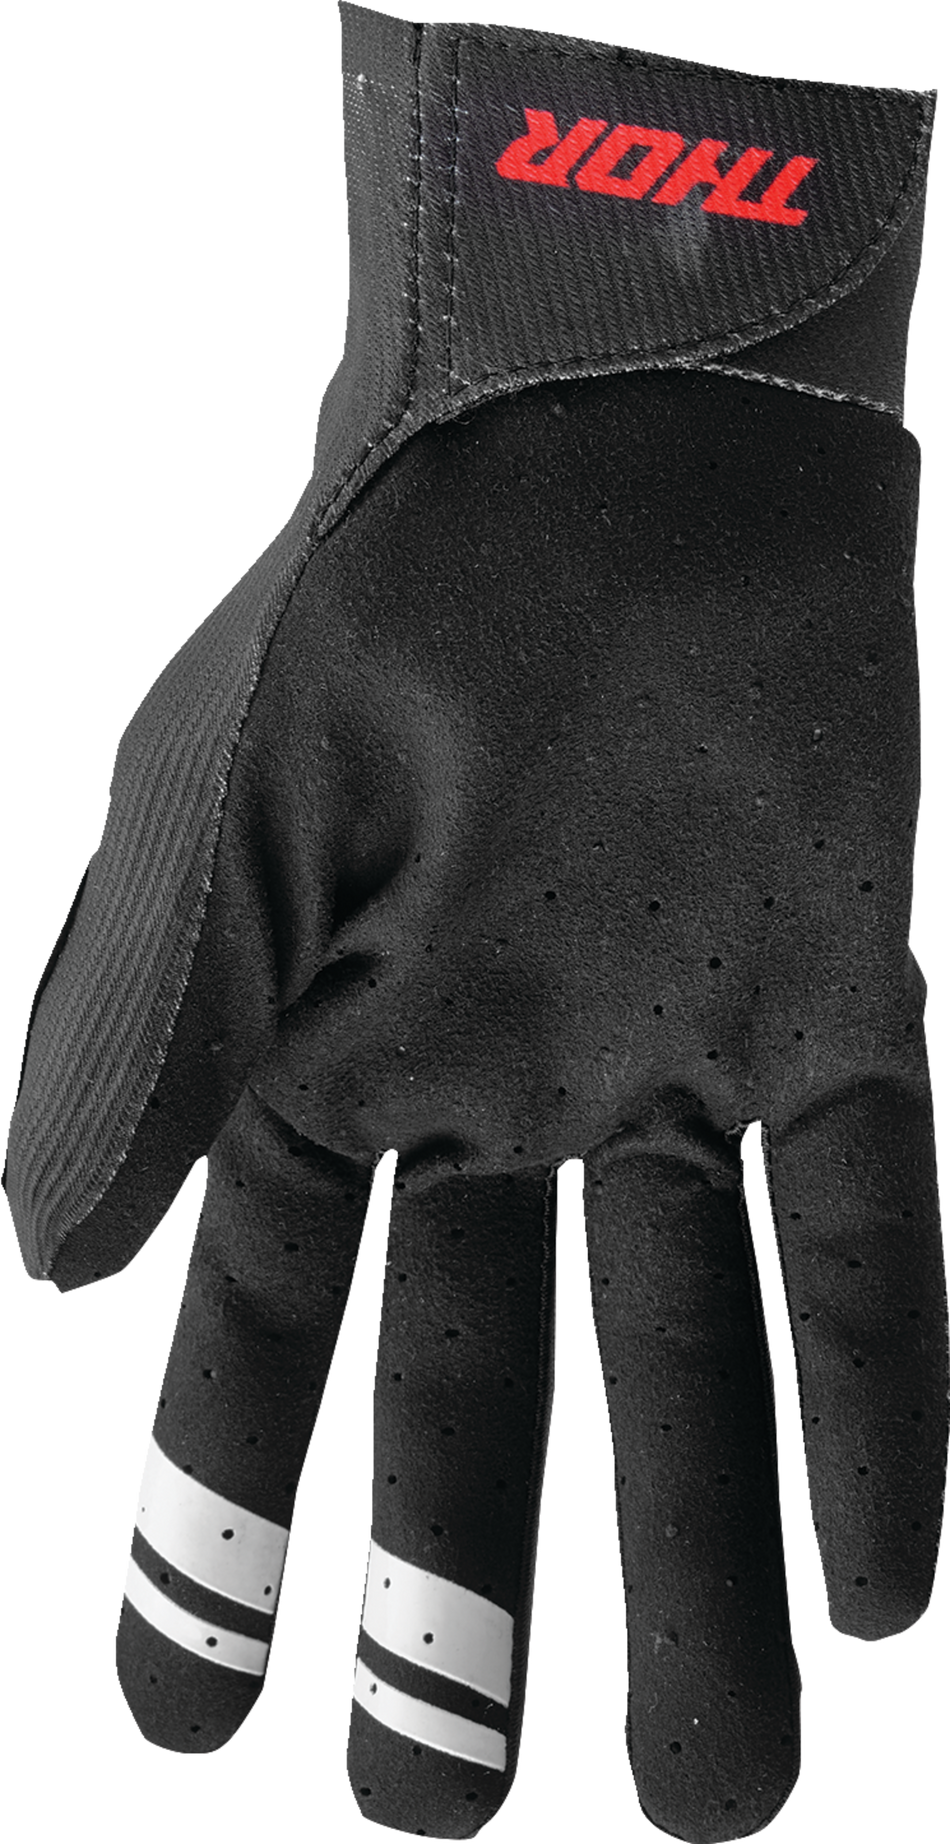 THOR Intense Assist Decoy Gloves - Black/Camo - Small 3360-0218